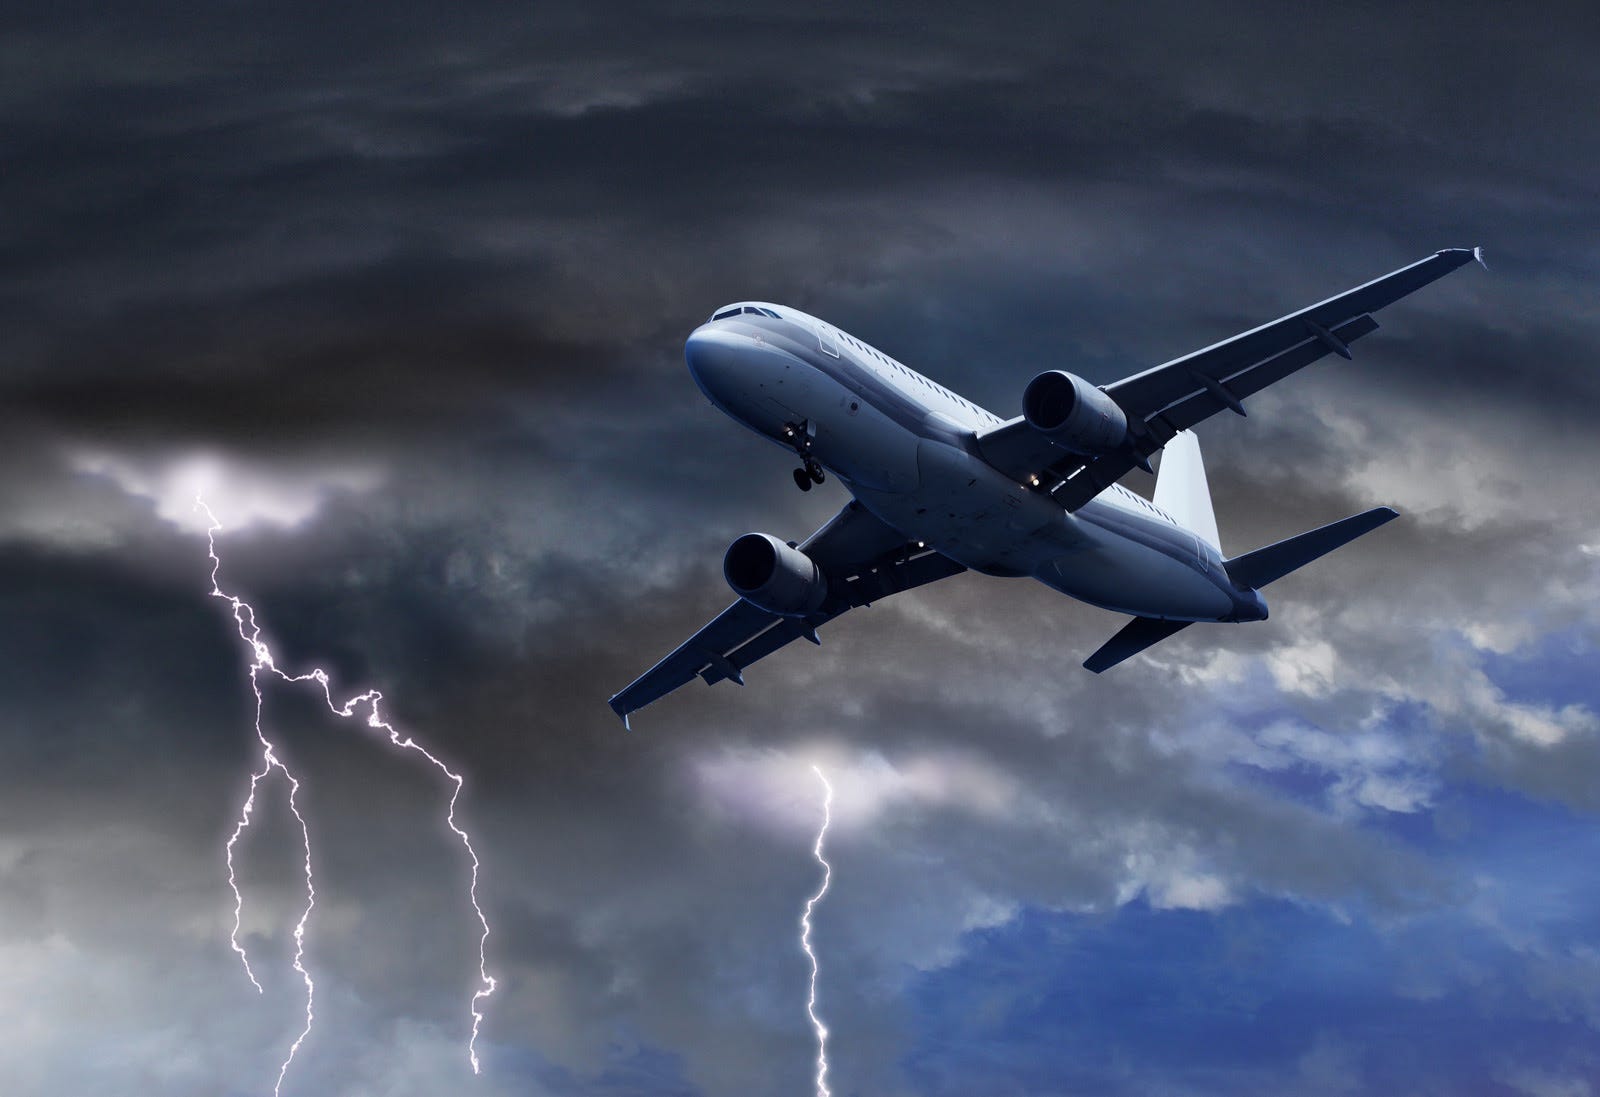 What is air turbulence?